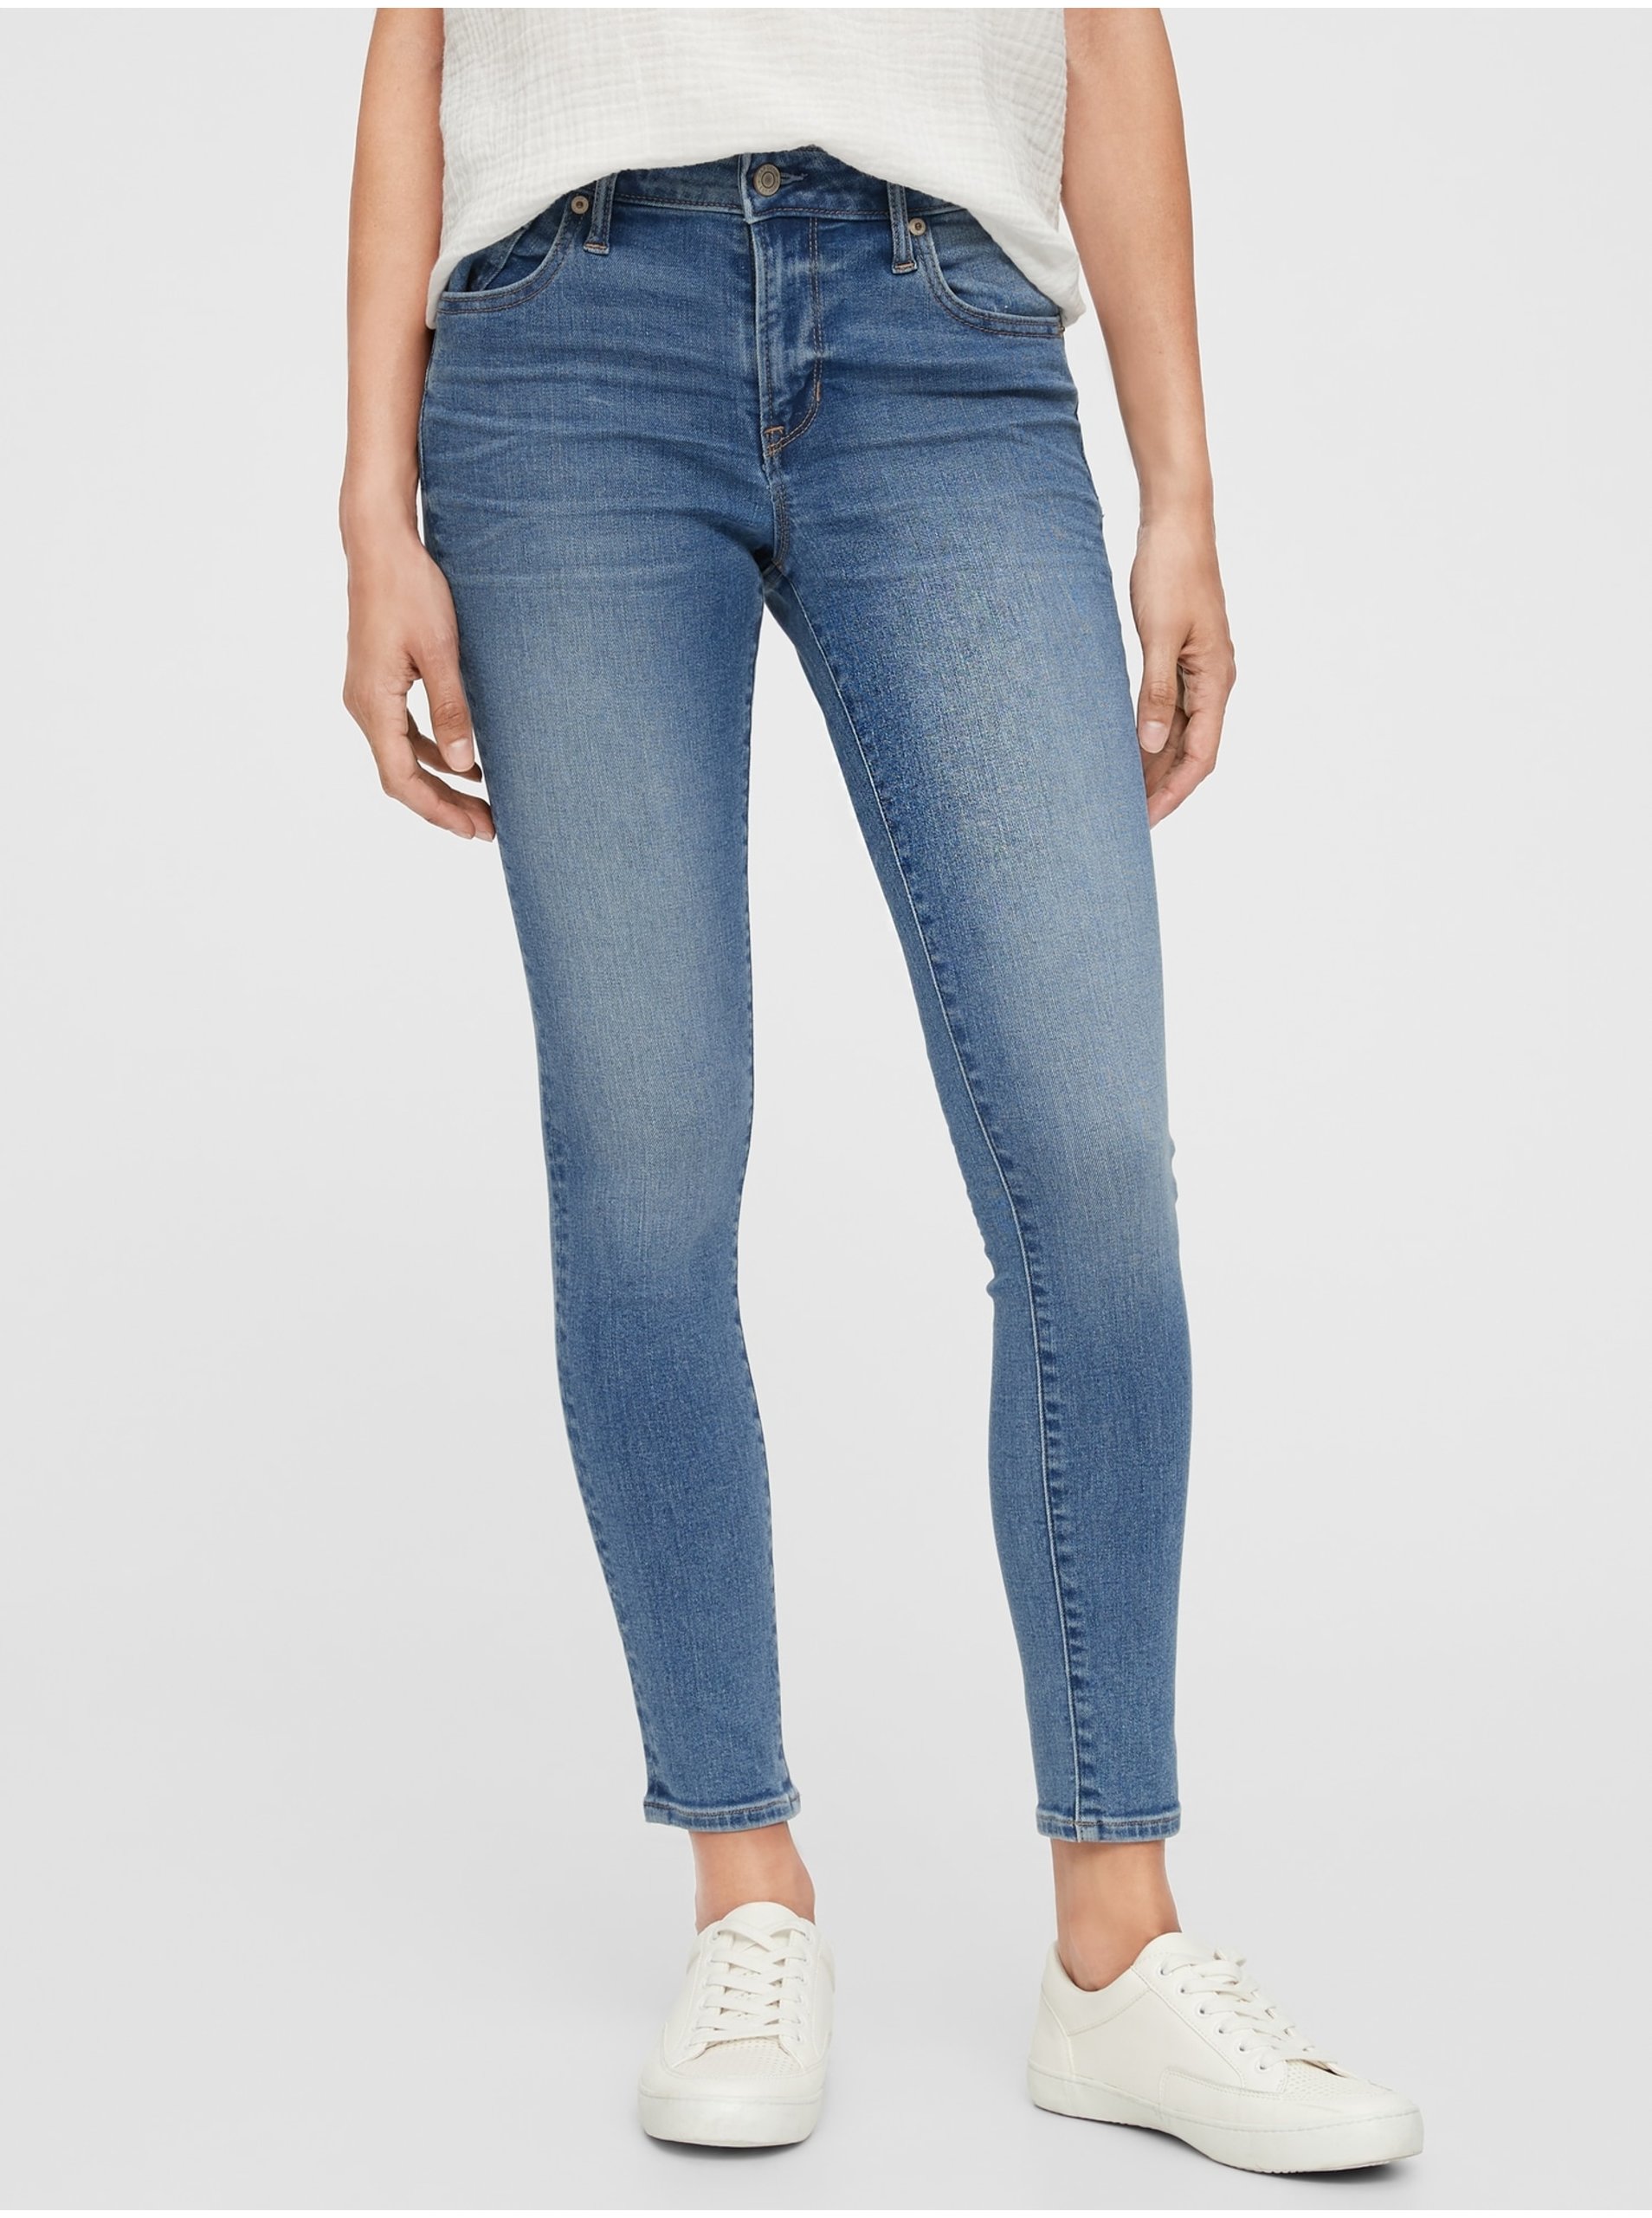 Lacno Modré dámské džíny mid rise universal legging jeans